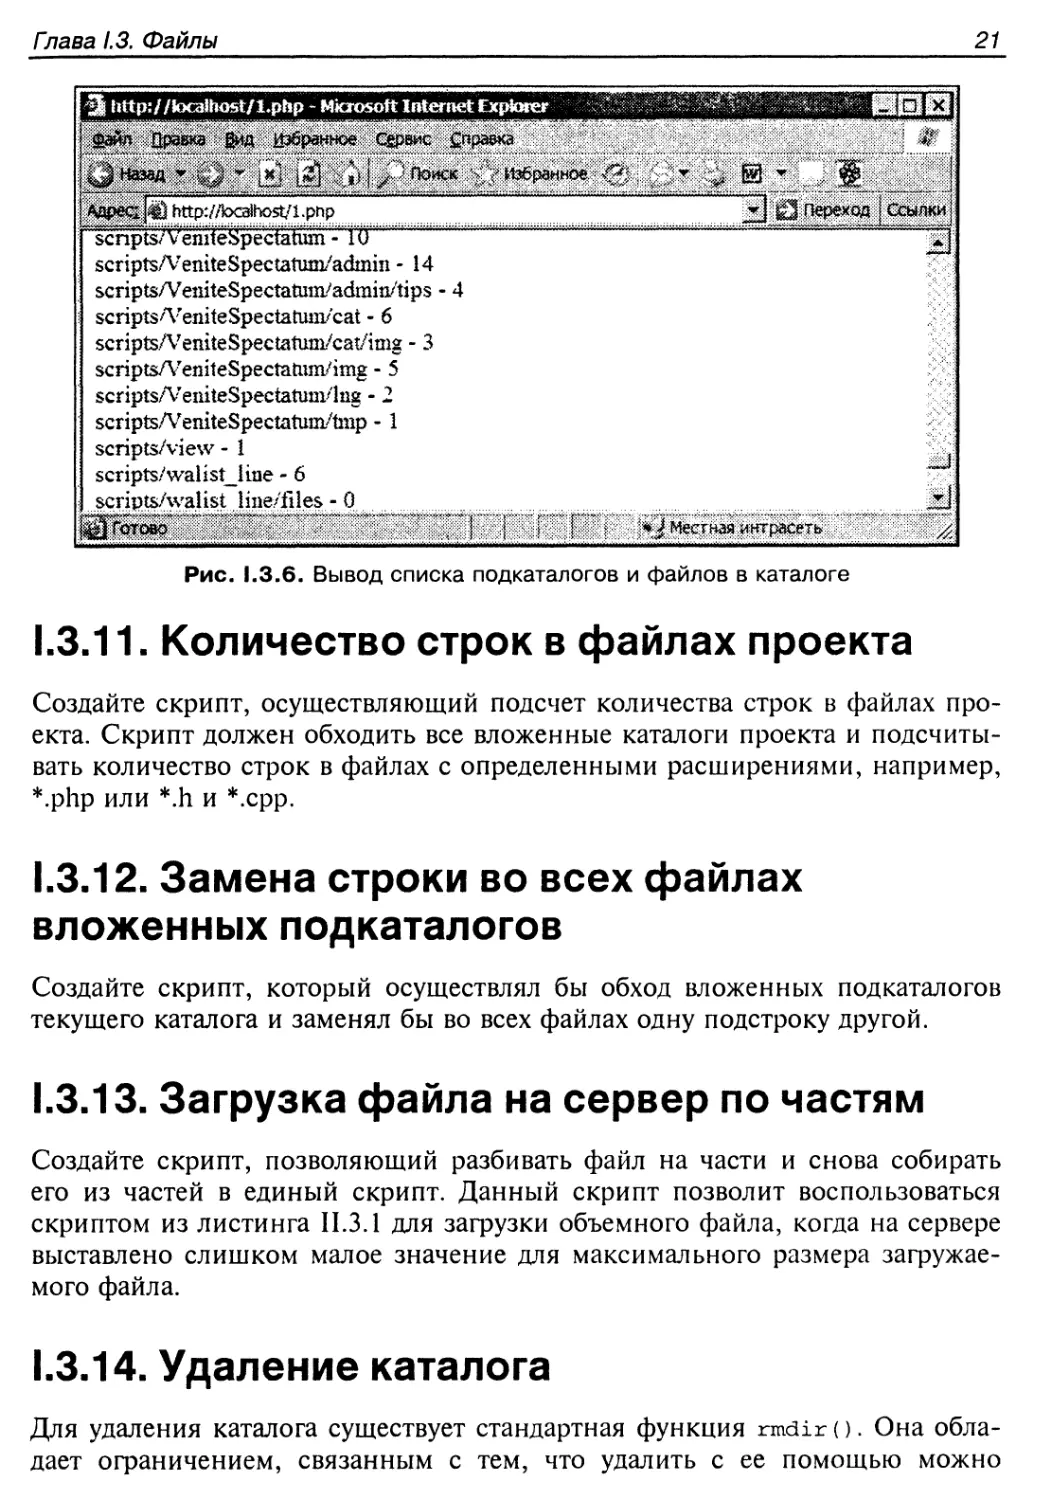 1.3.11. Количество строк в файлах проекта
1.3.12. Замена строки во всех файлах вложенных подкаталогов
1.3.13. Загрузка файла на сервер по частям
1.3.14. Удаление каталога